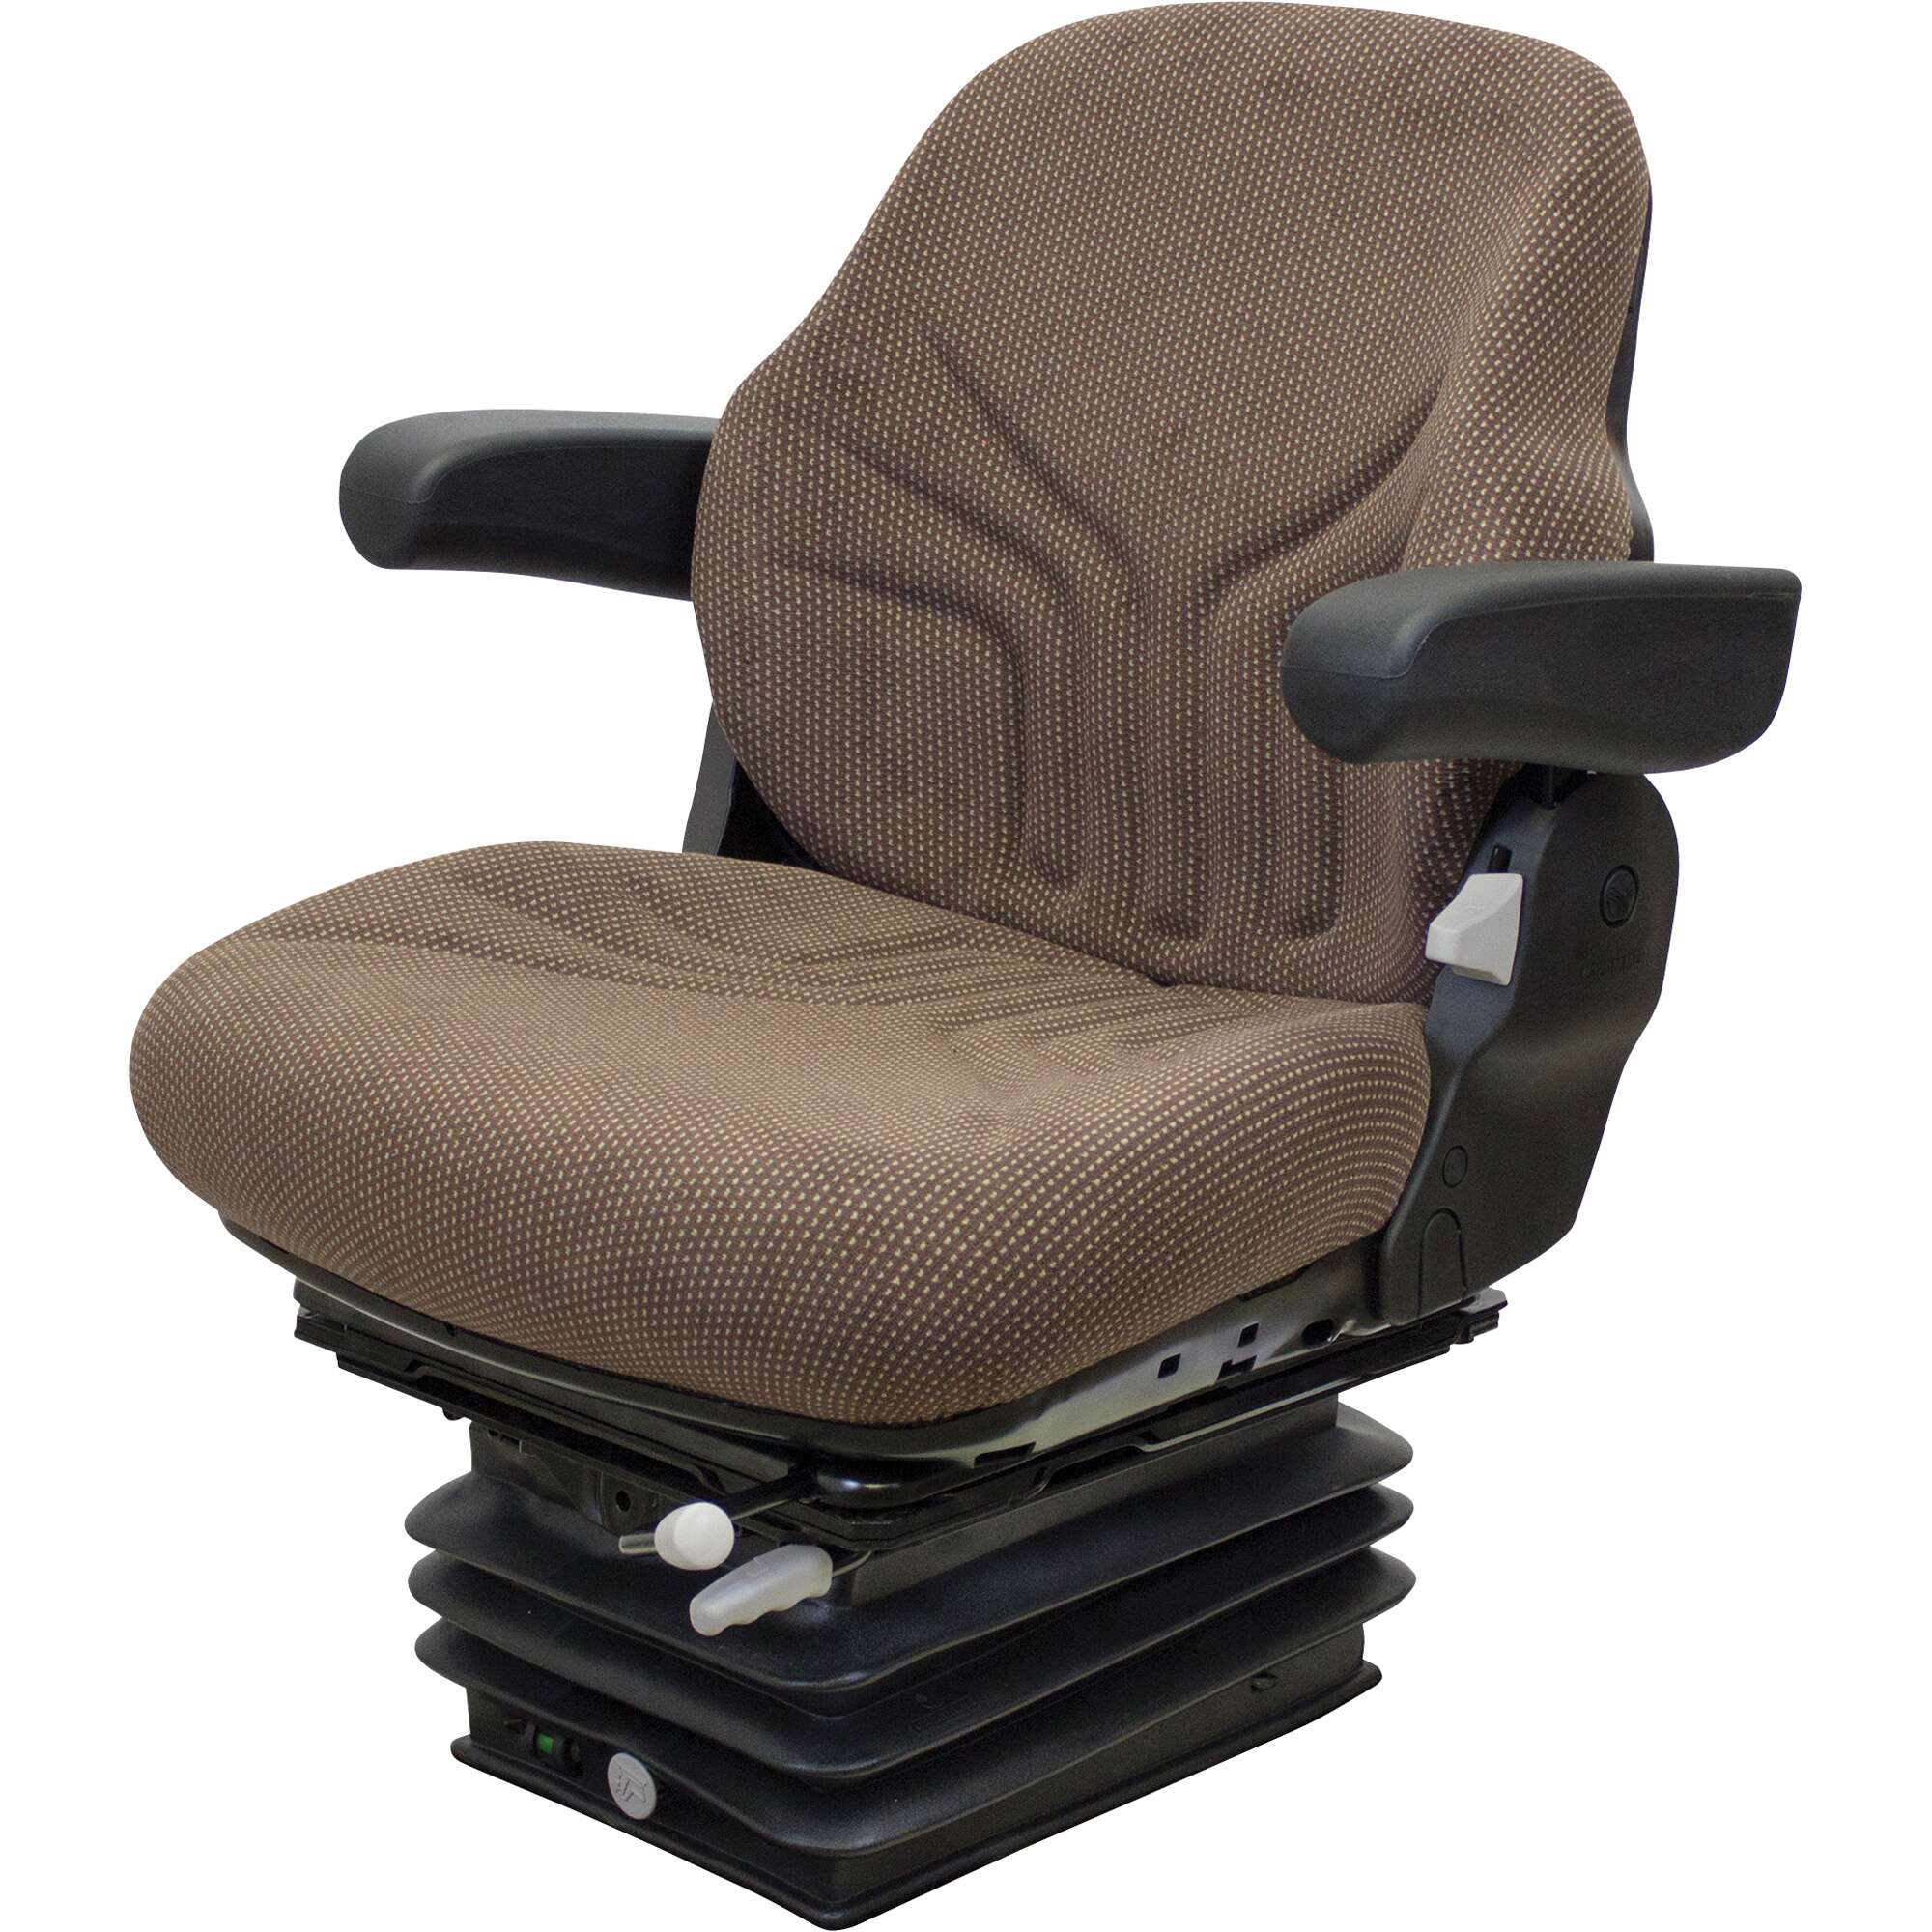 Grammer Brand John Deere Series Mechanical Reclining Seat and Air Suspension Combo Fits John Deere 30 55 Late Series 285Lb Capacity